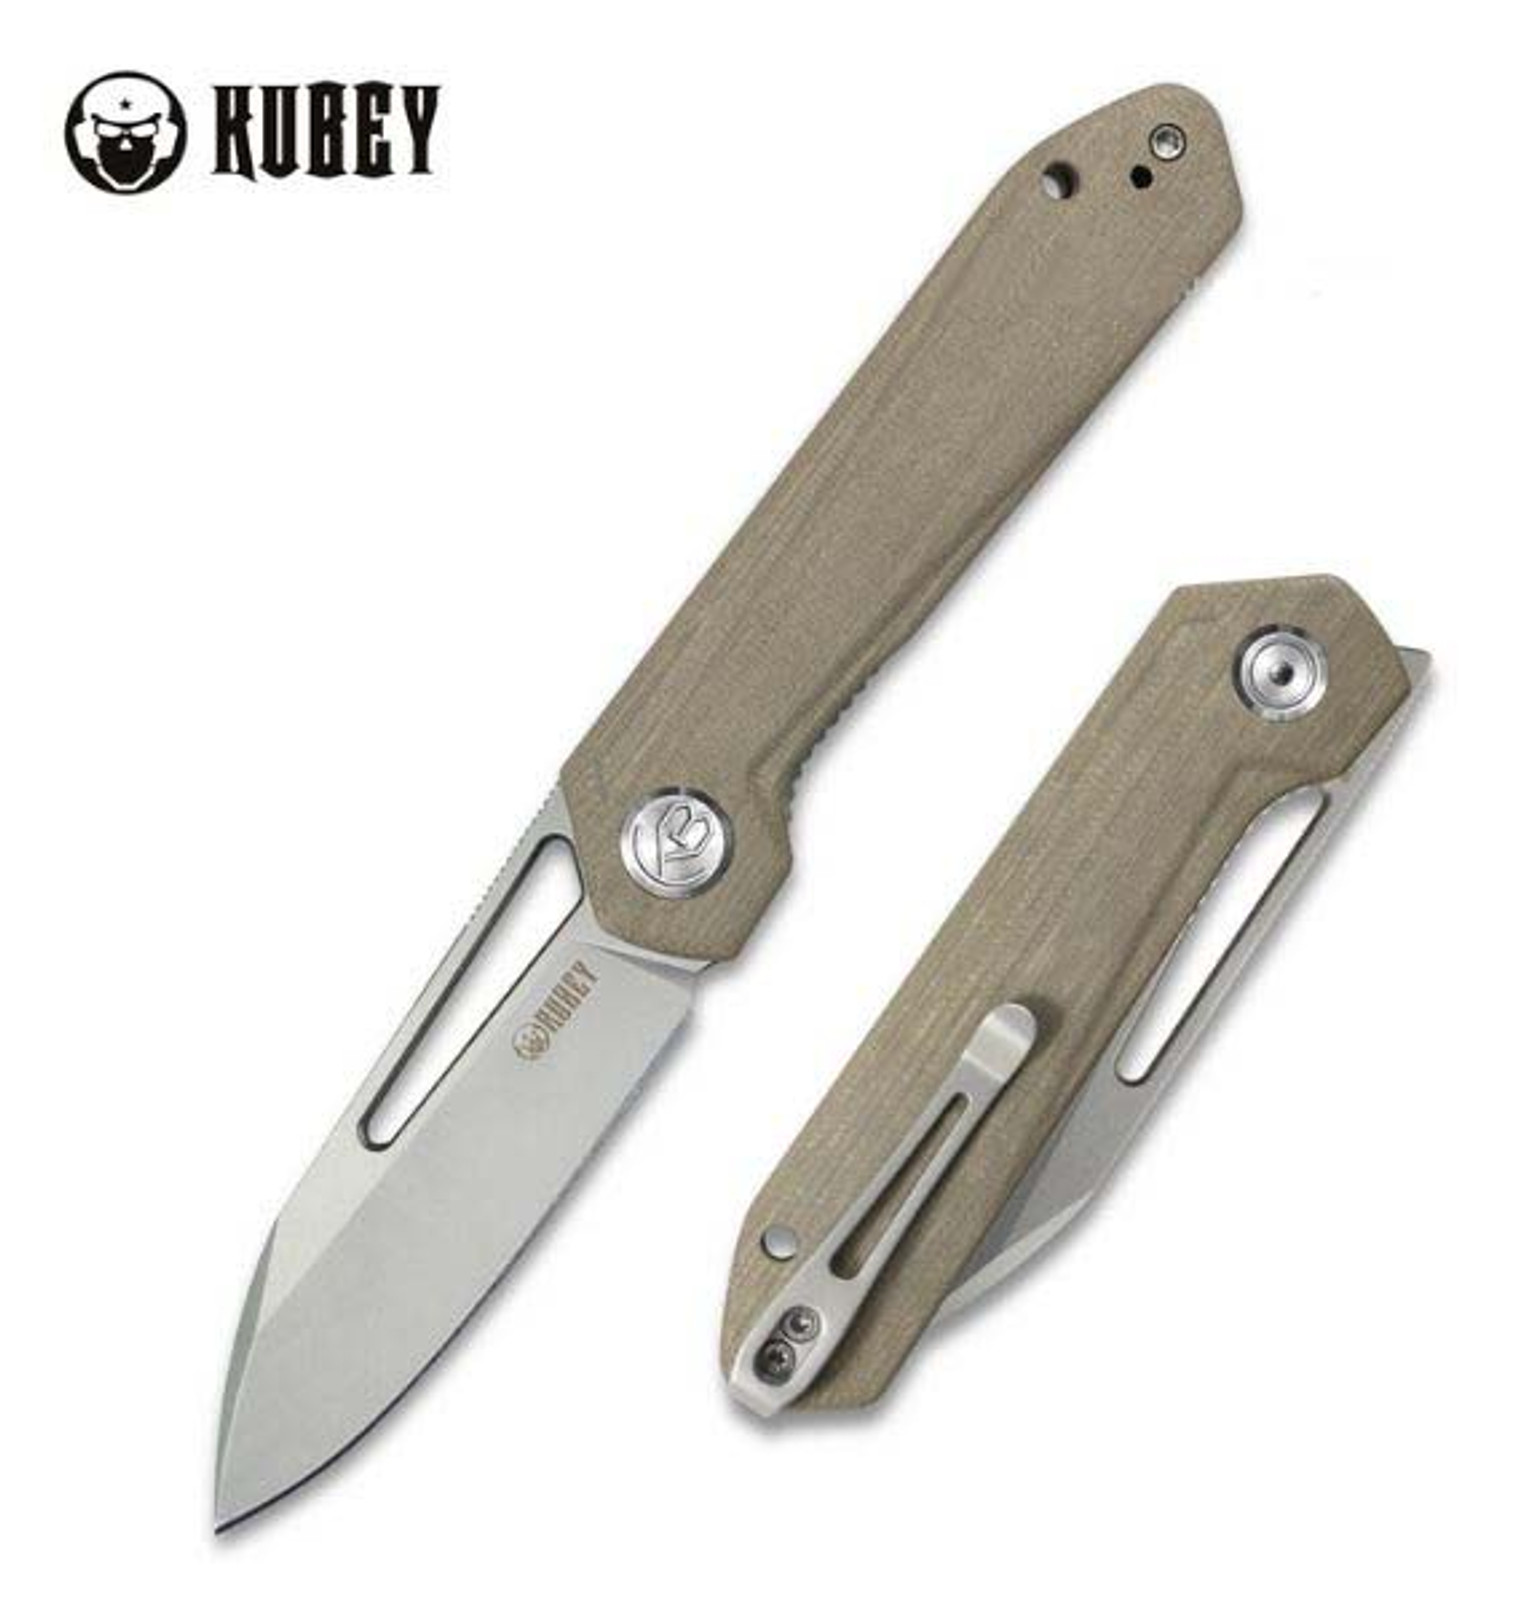 Kubey Royal Front Flipper Knife, D2 Steel, G10 Tan, KU321D